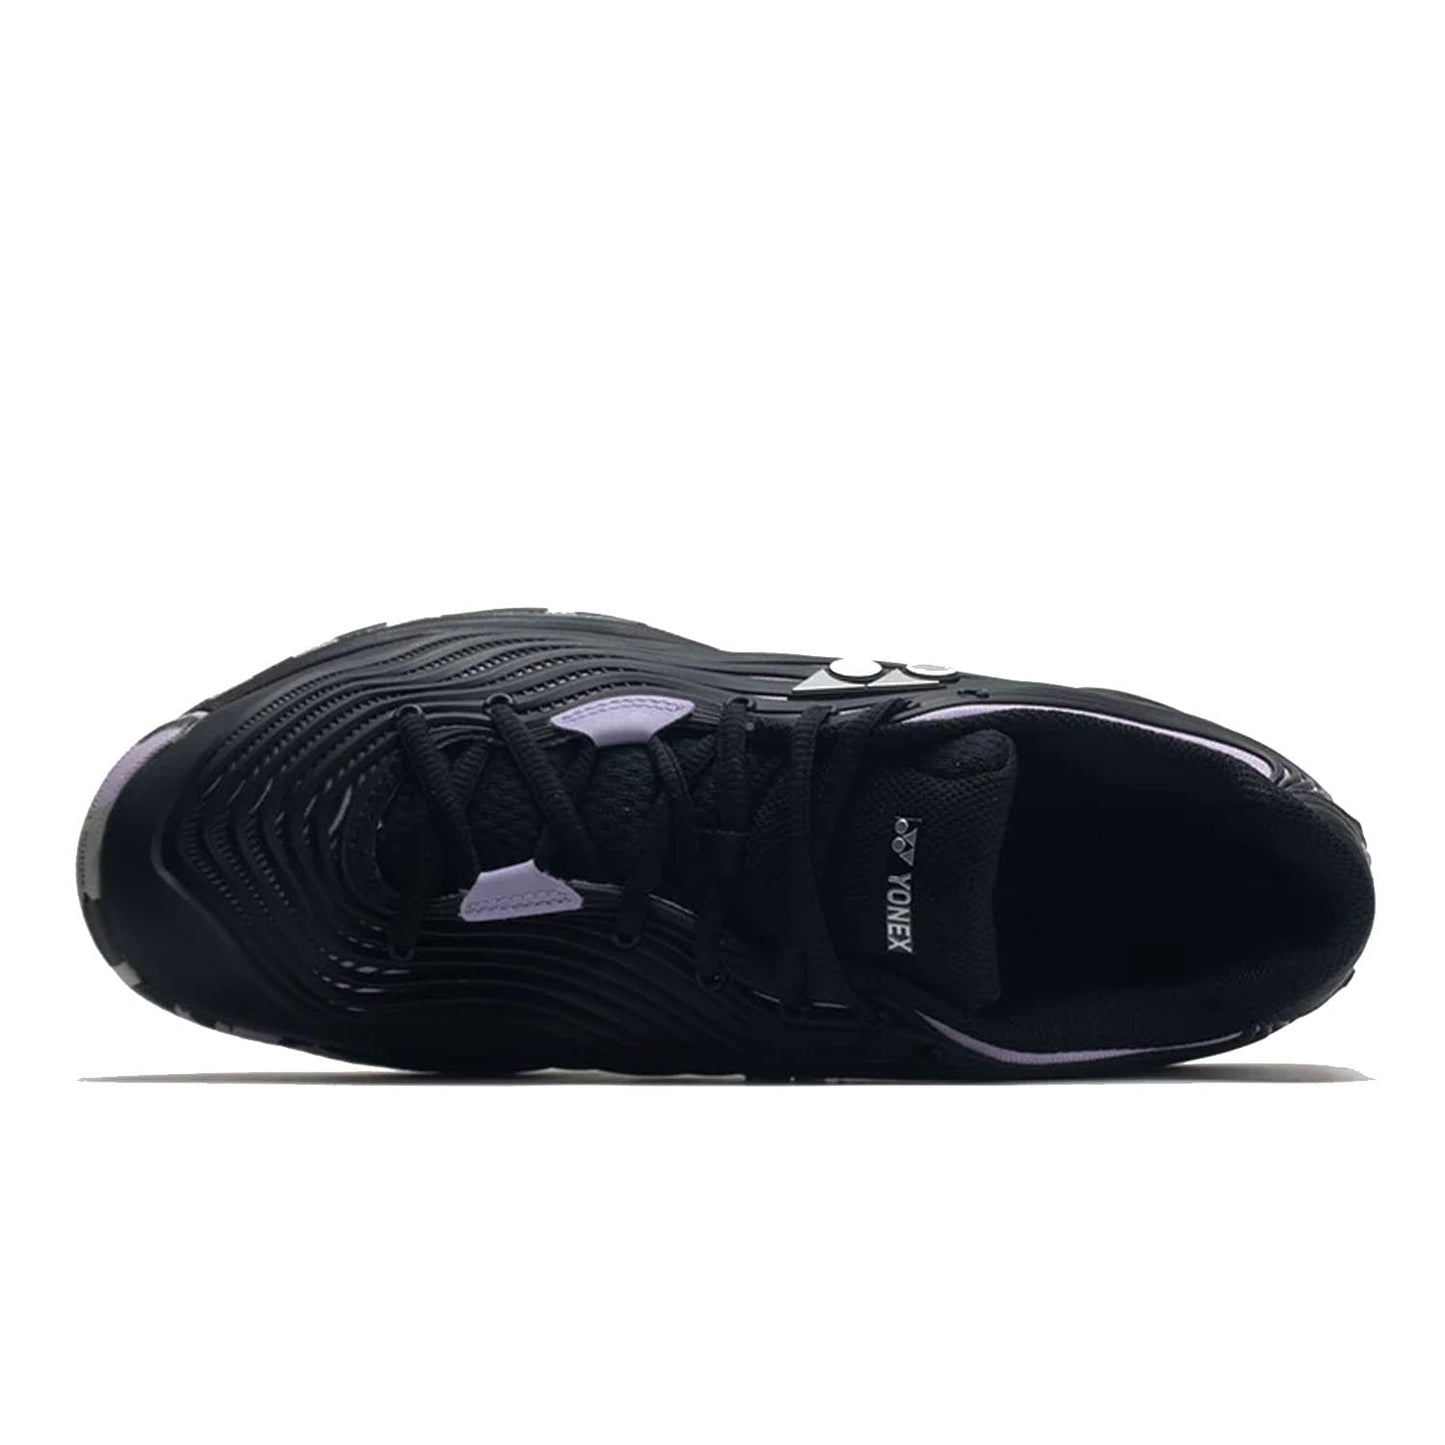 Yonex Power Cushion Fusionrev Men's 5 Tennis Shoe, Black/Purple